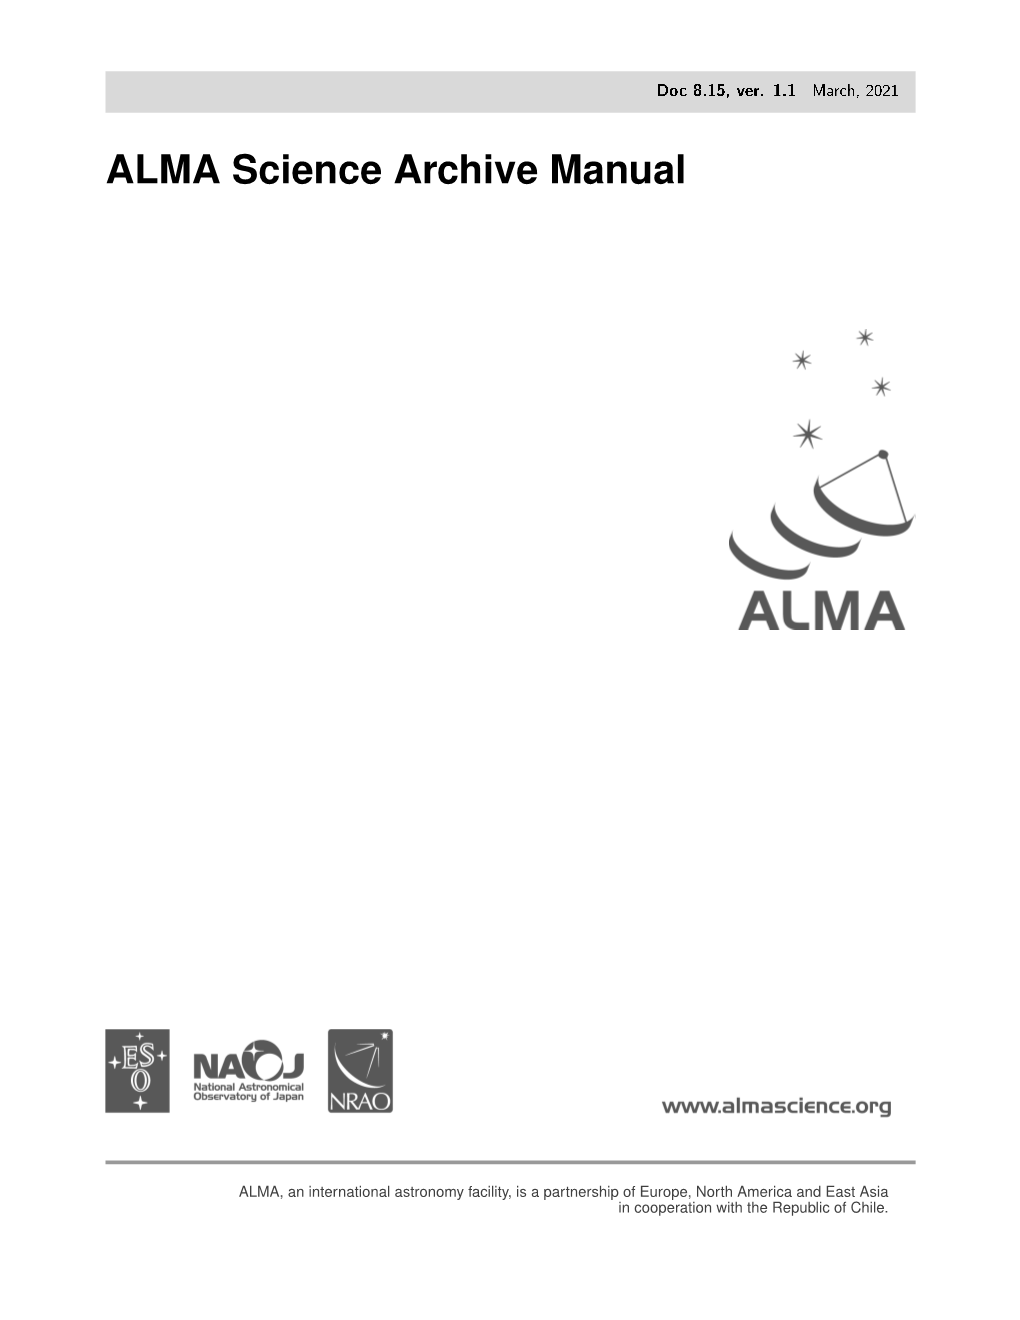 ALMA Science Archive Manual